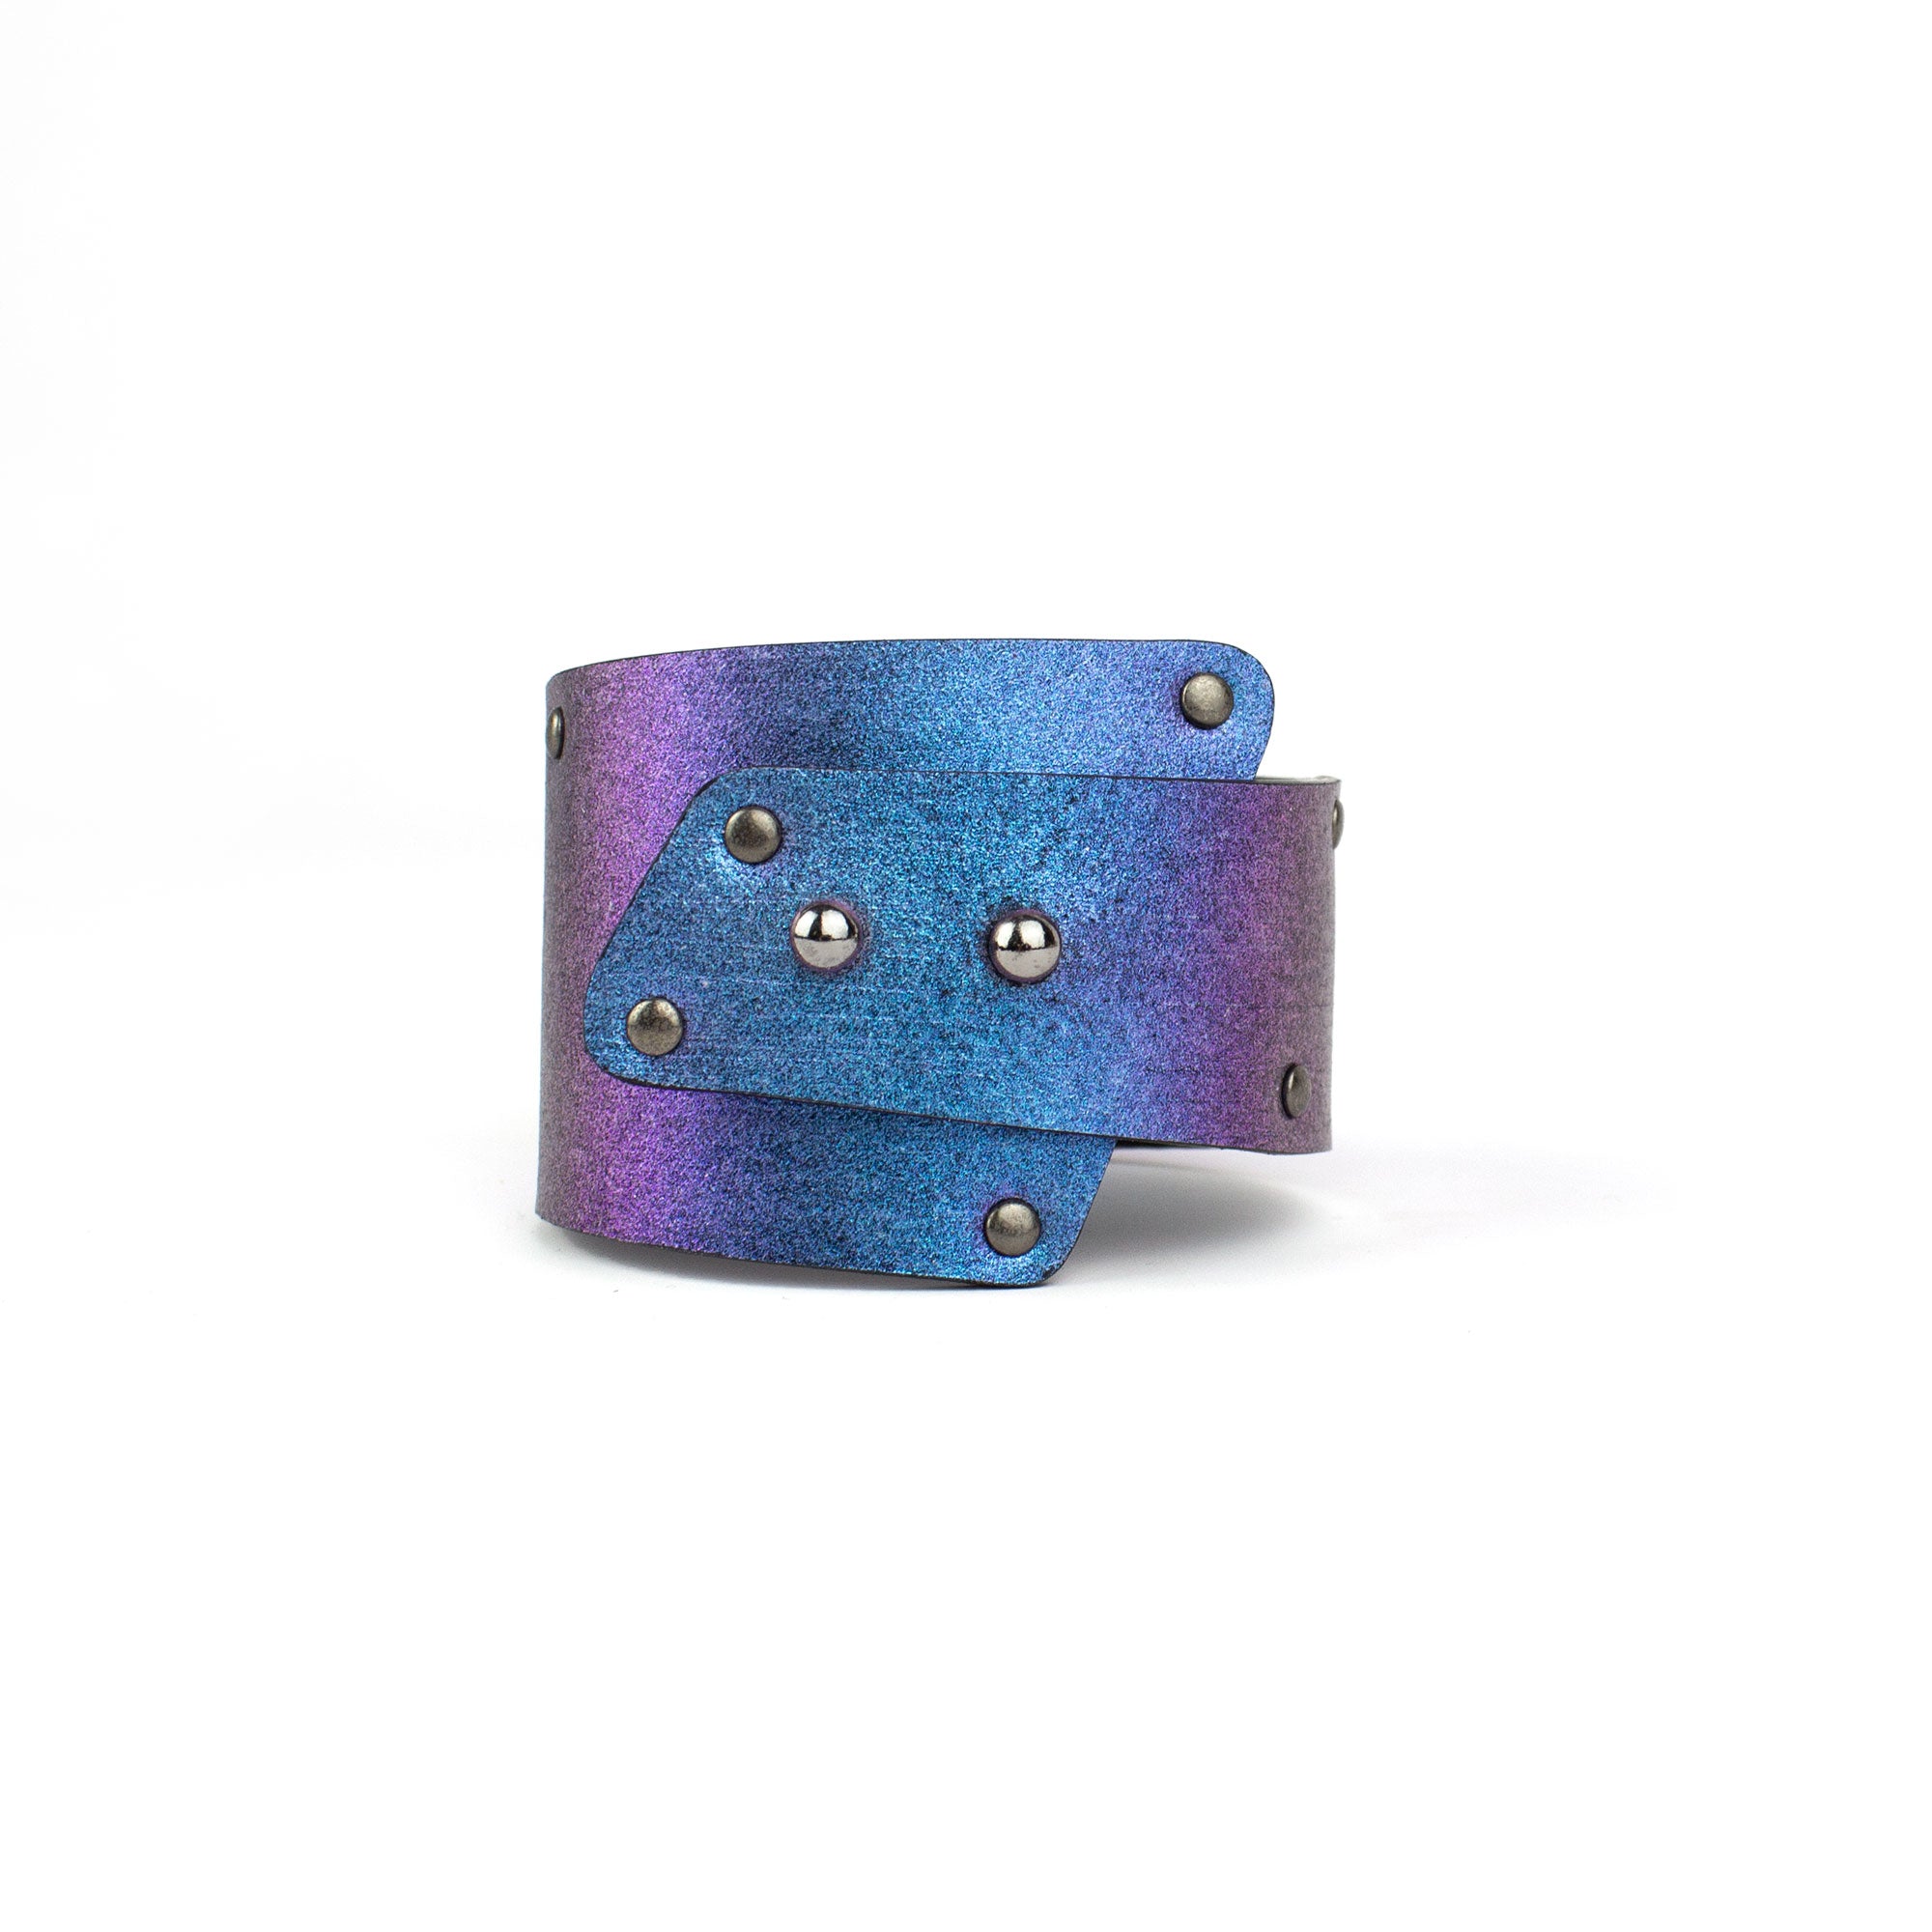 Chameleon holographic wide cuff bracelet leather bangles